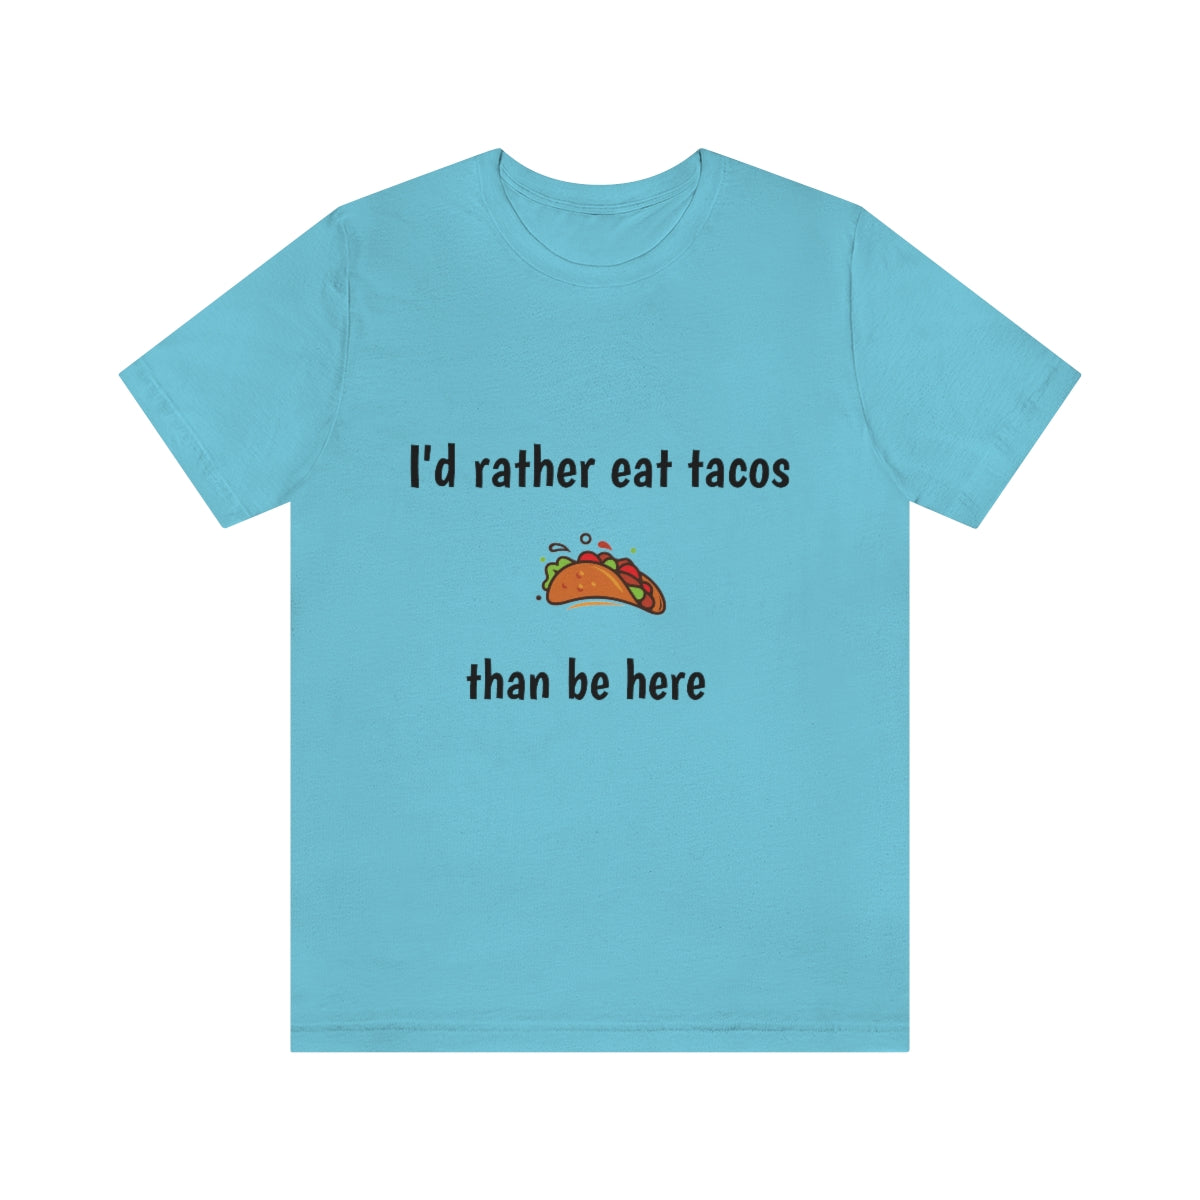 Id rather eat tacos - Funny Unisex Short Sleeve Tee